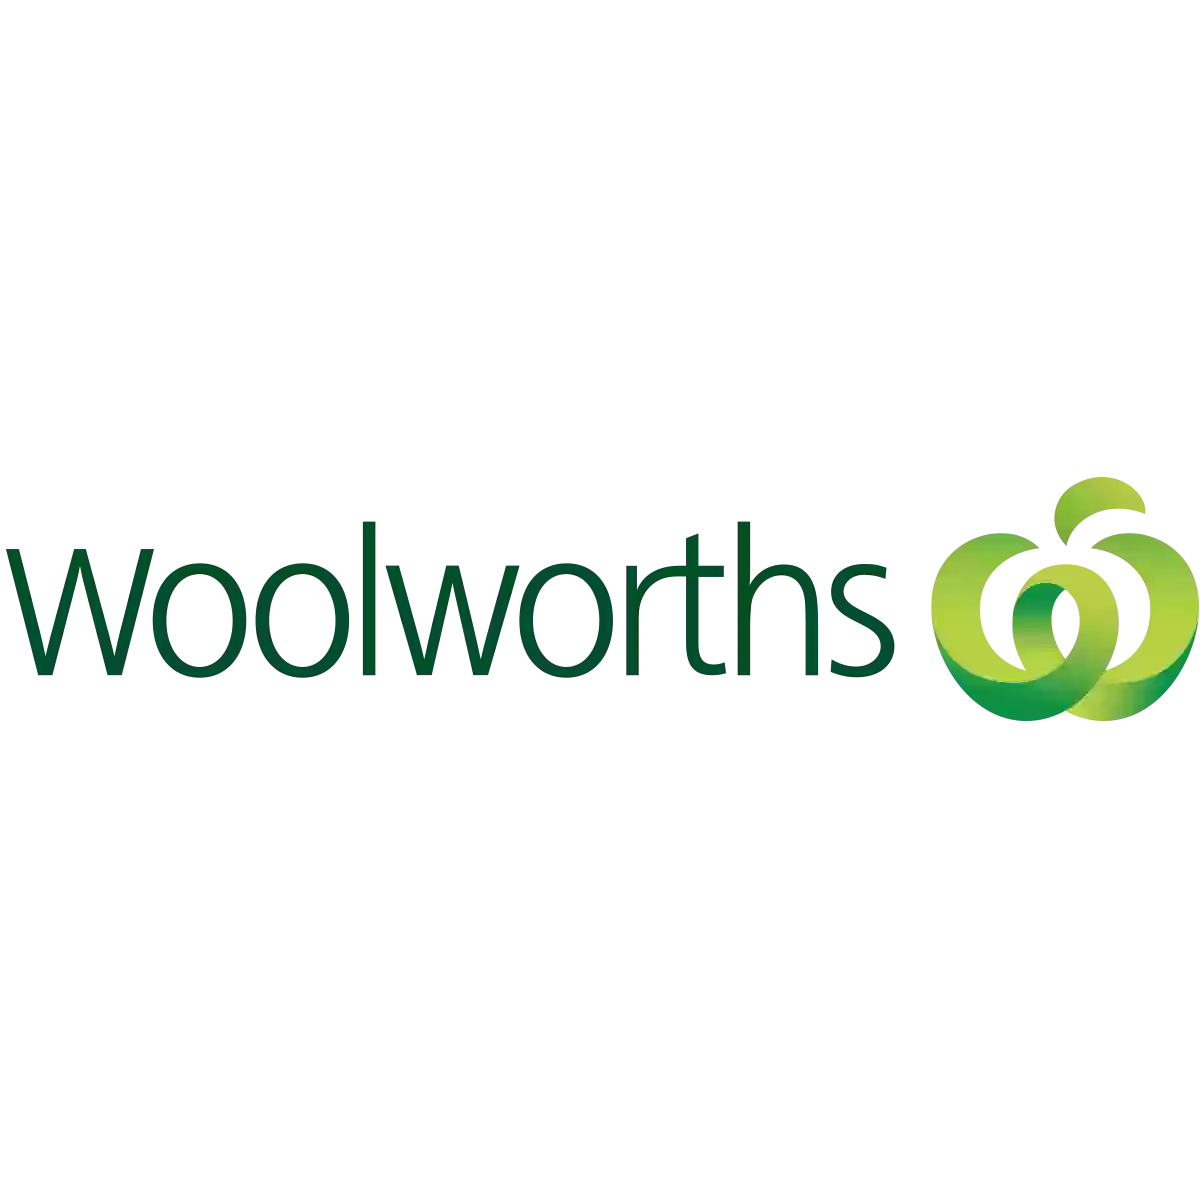 Woolworths Brighton